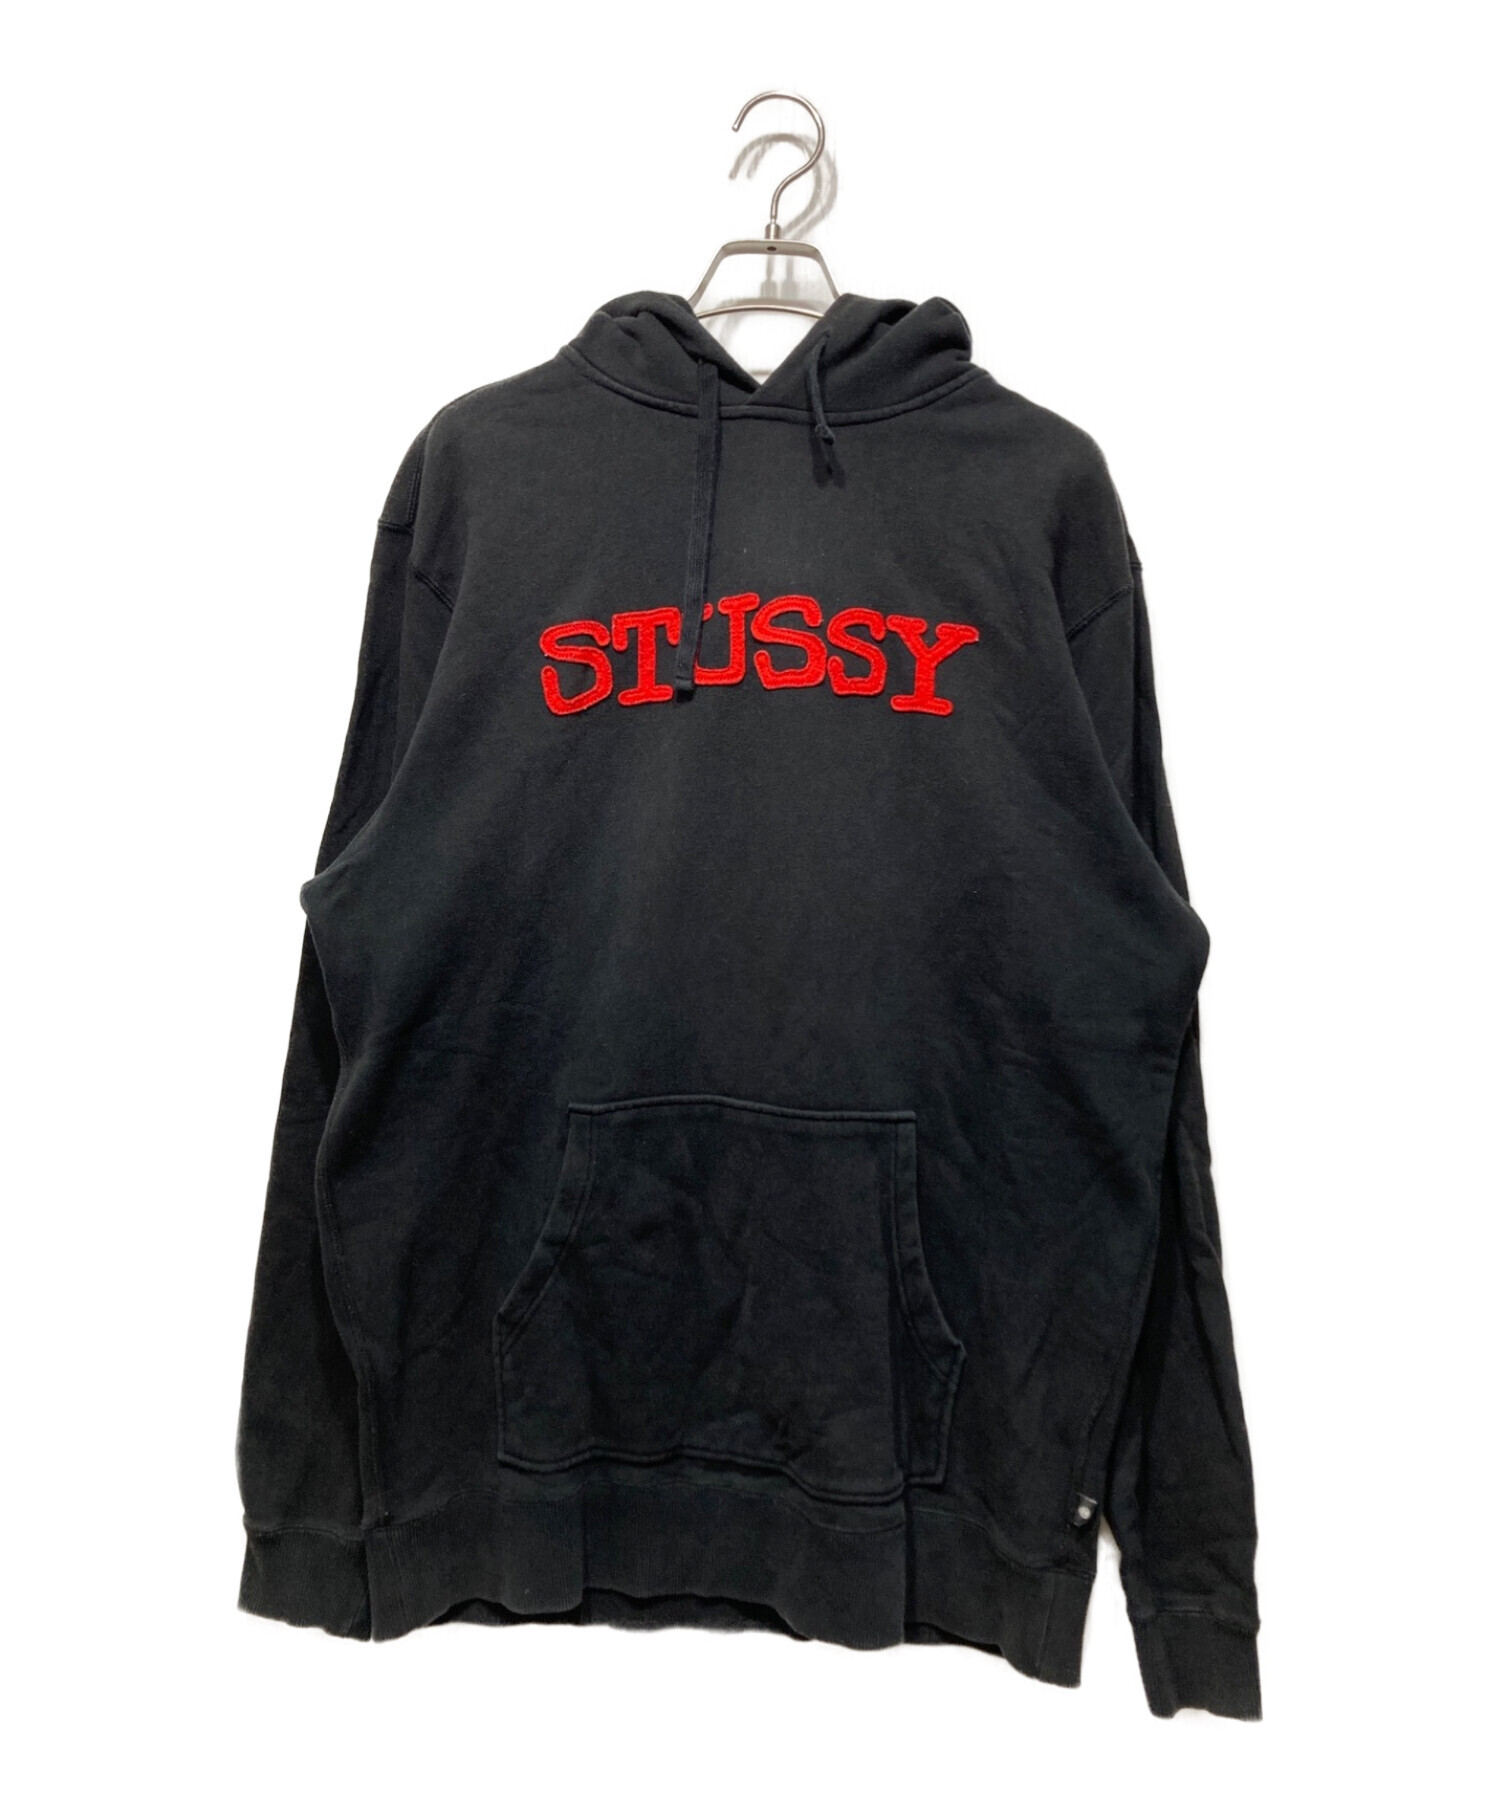 stussy (ステューシー) プルオーバーパーカー ブラック サイズ:XL